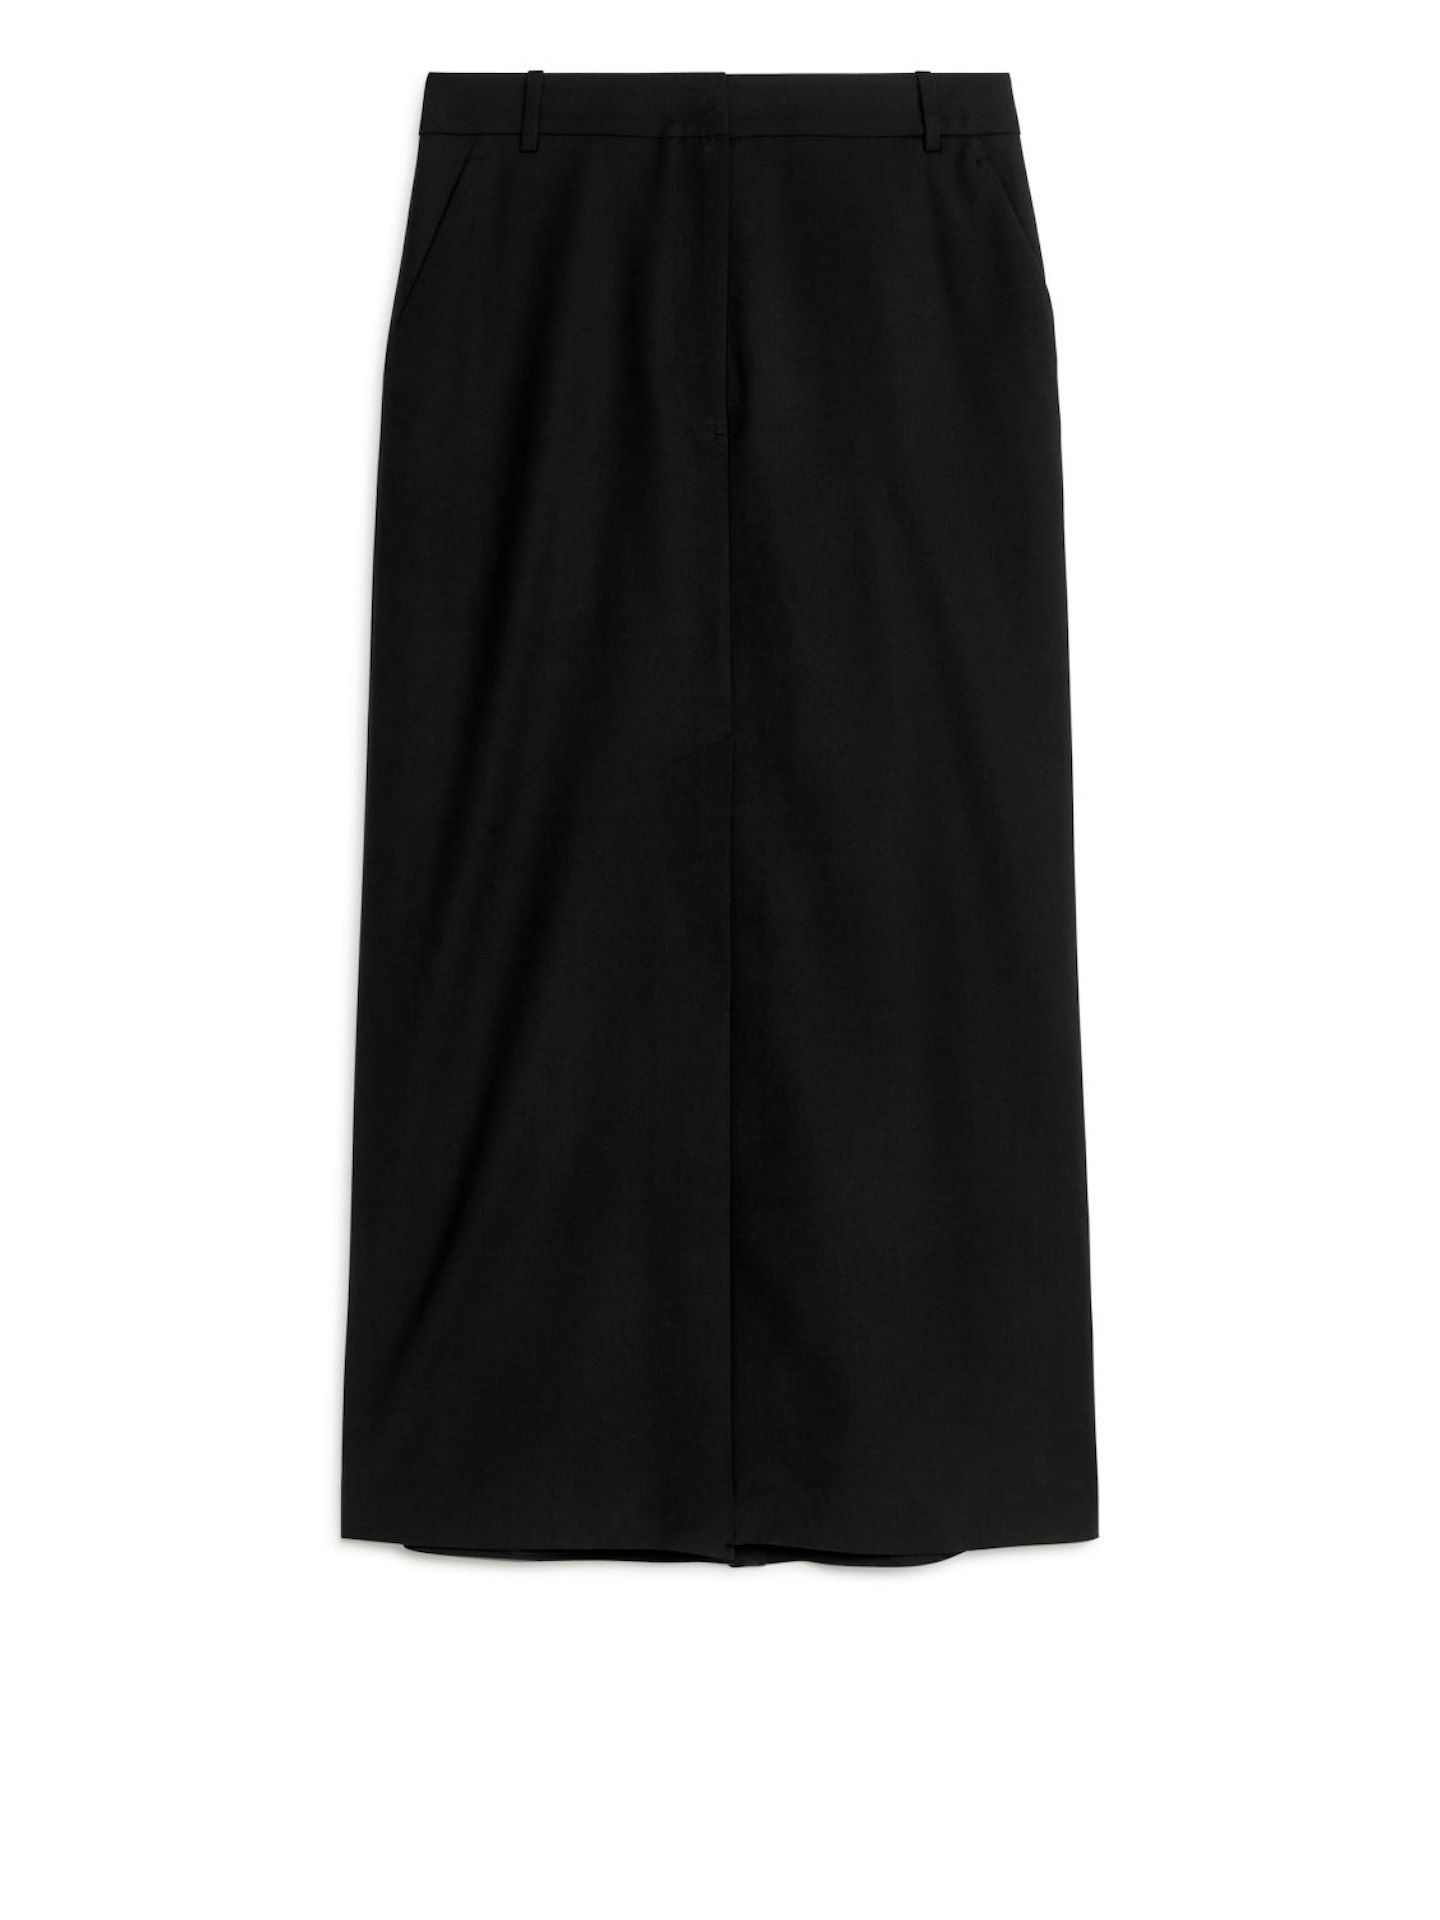 Arket, Tailored Wool-Blend Skirt